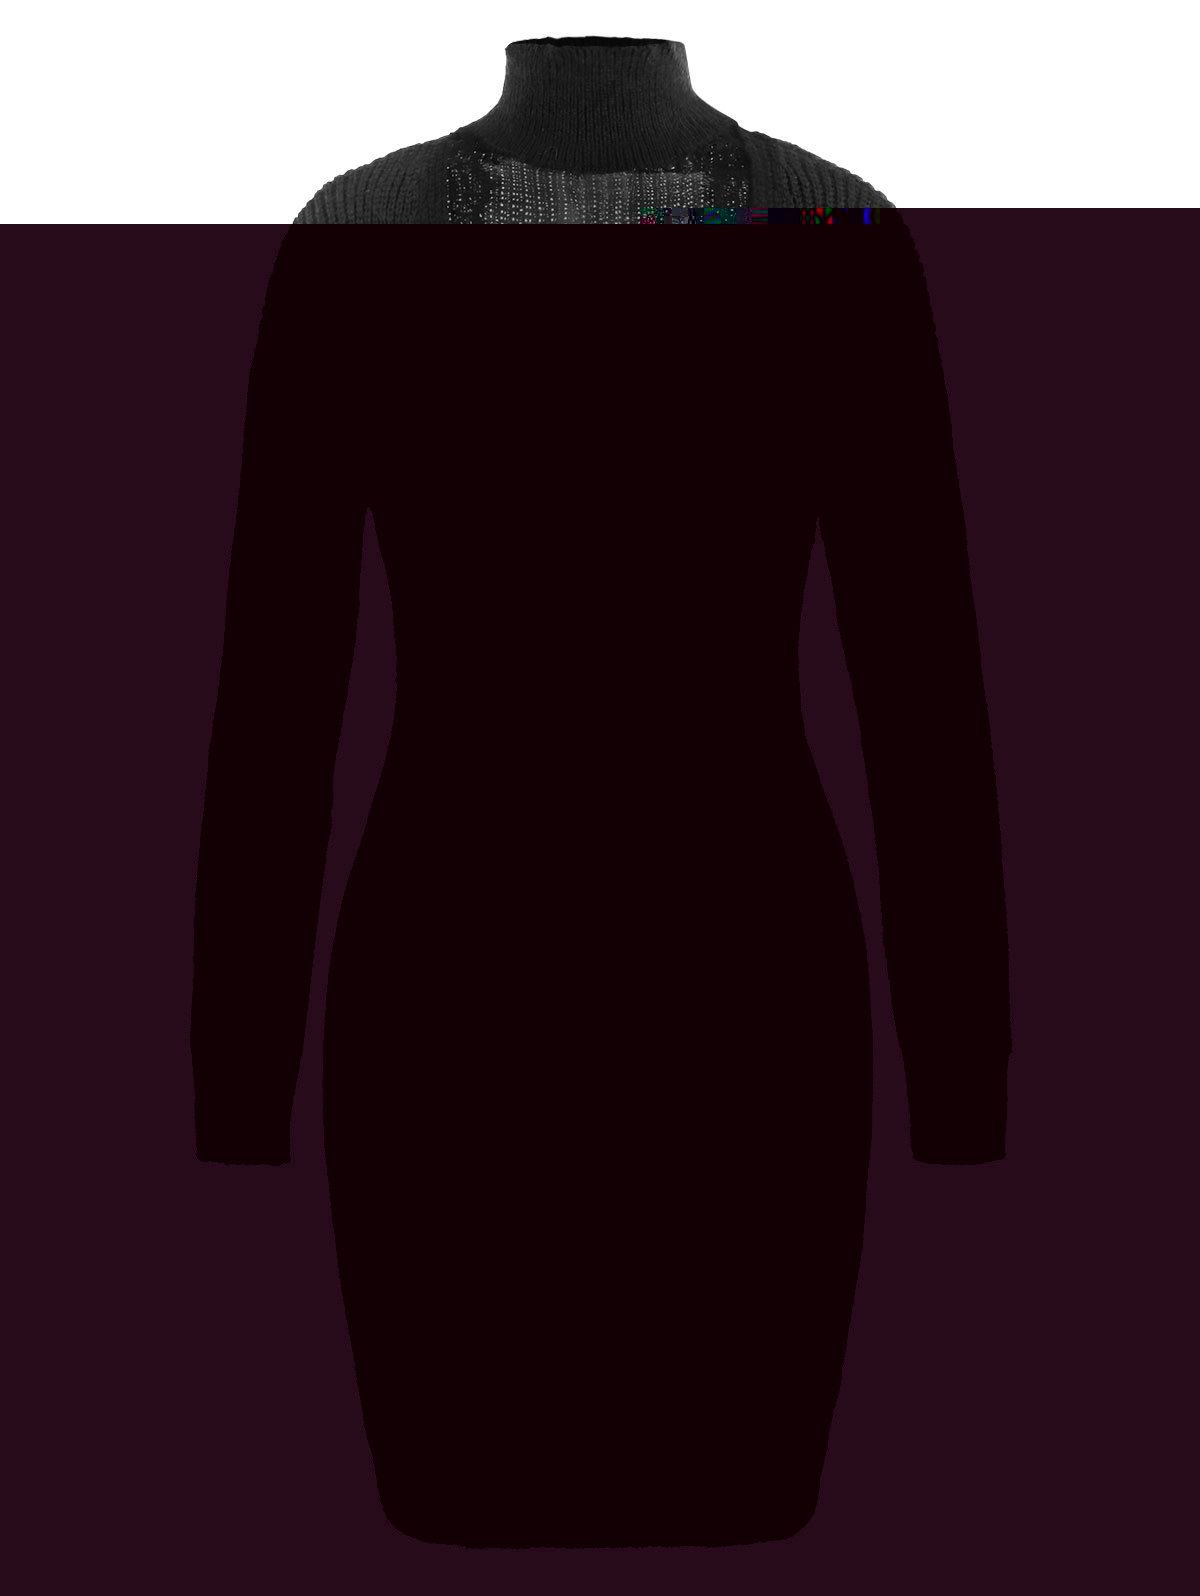 Plus Size Lace Panel Cutout Choker Jumper Dress - BLACK XL